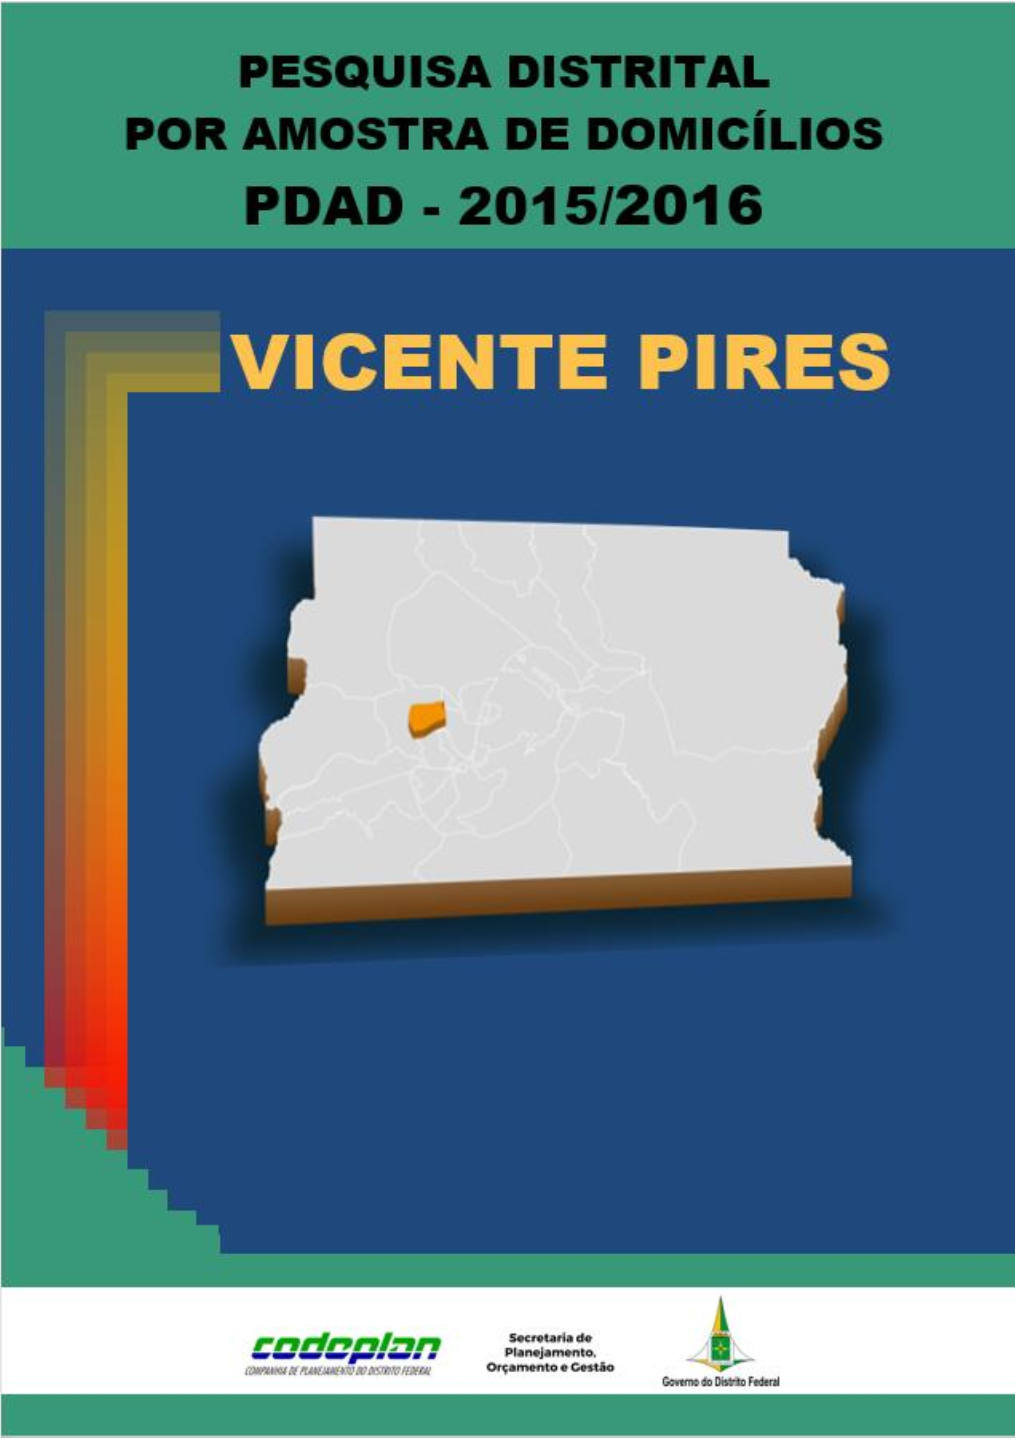 Vicente Pires - Pdad 2016